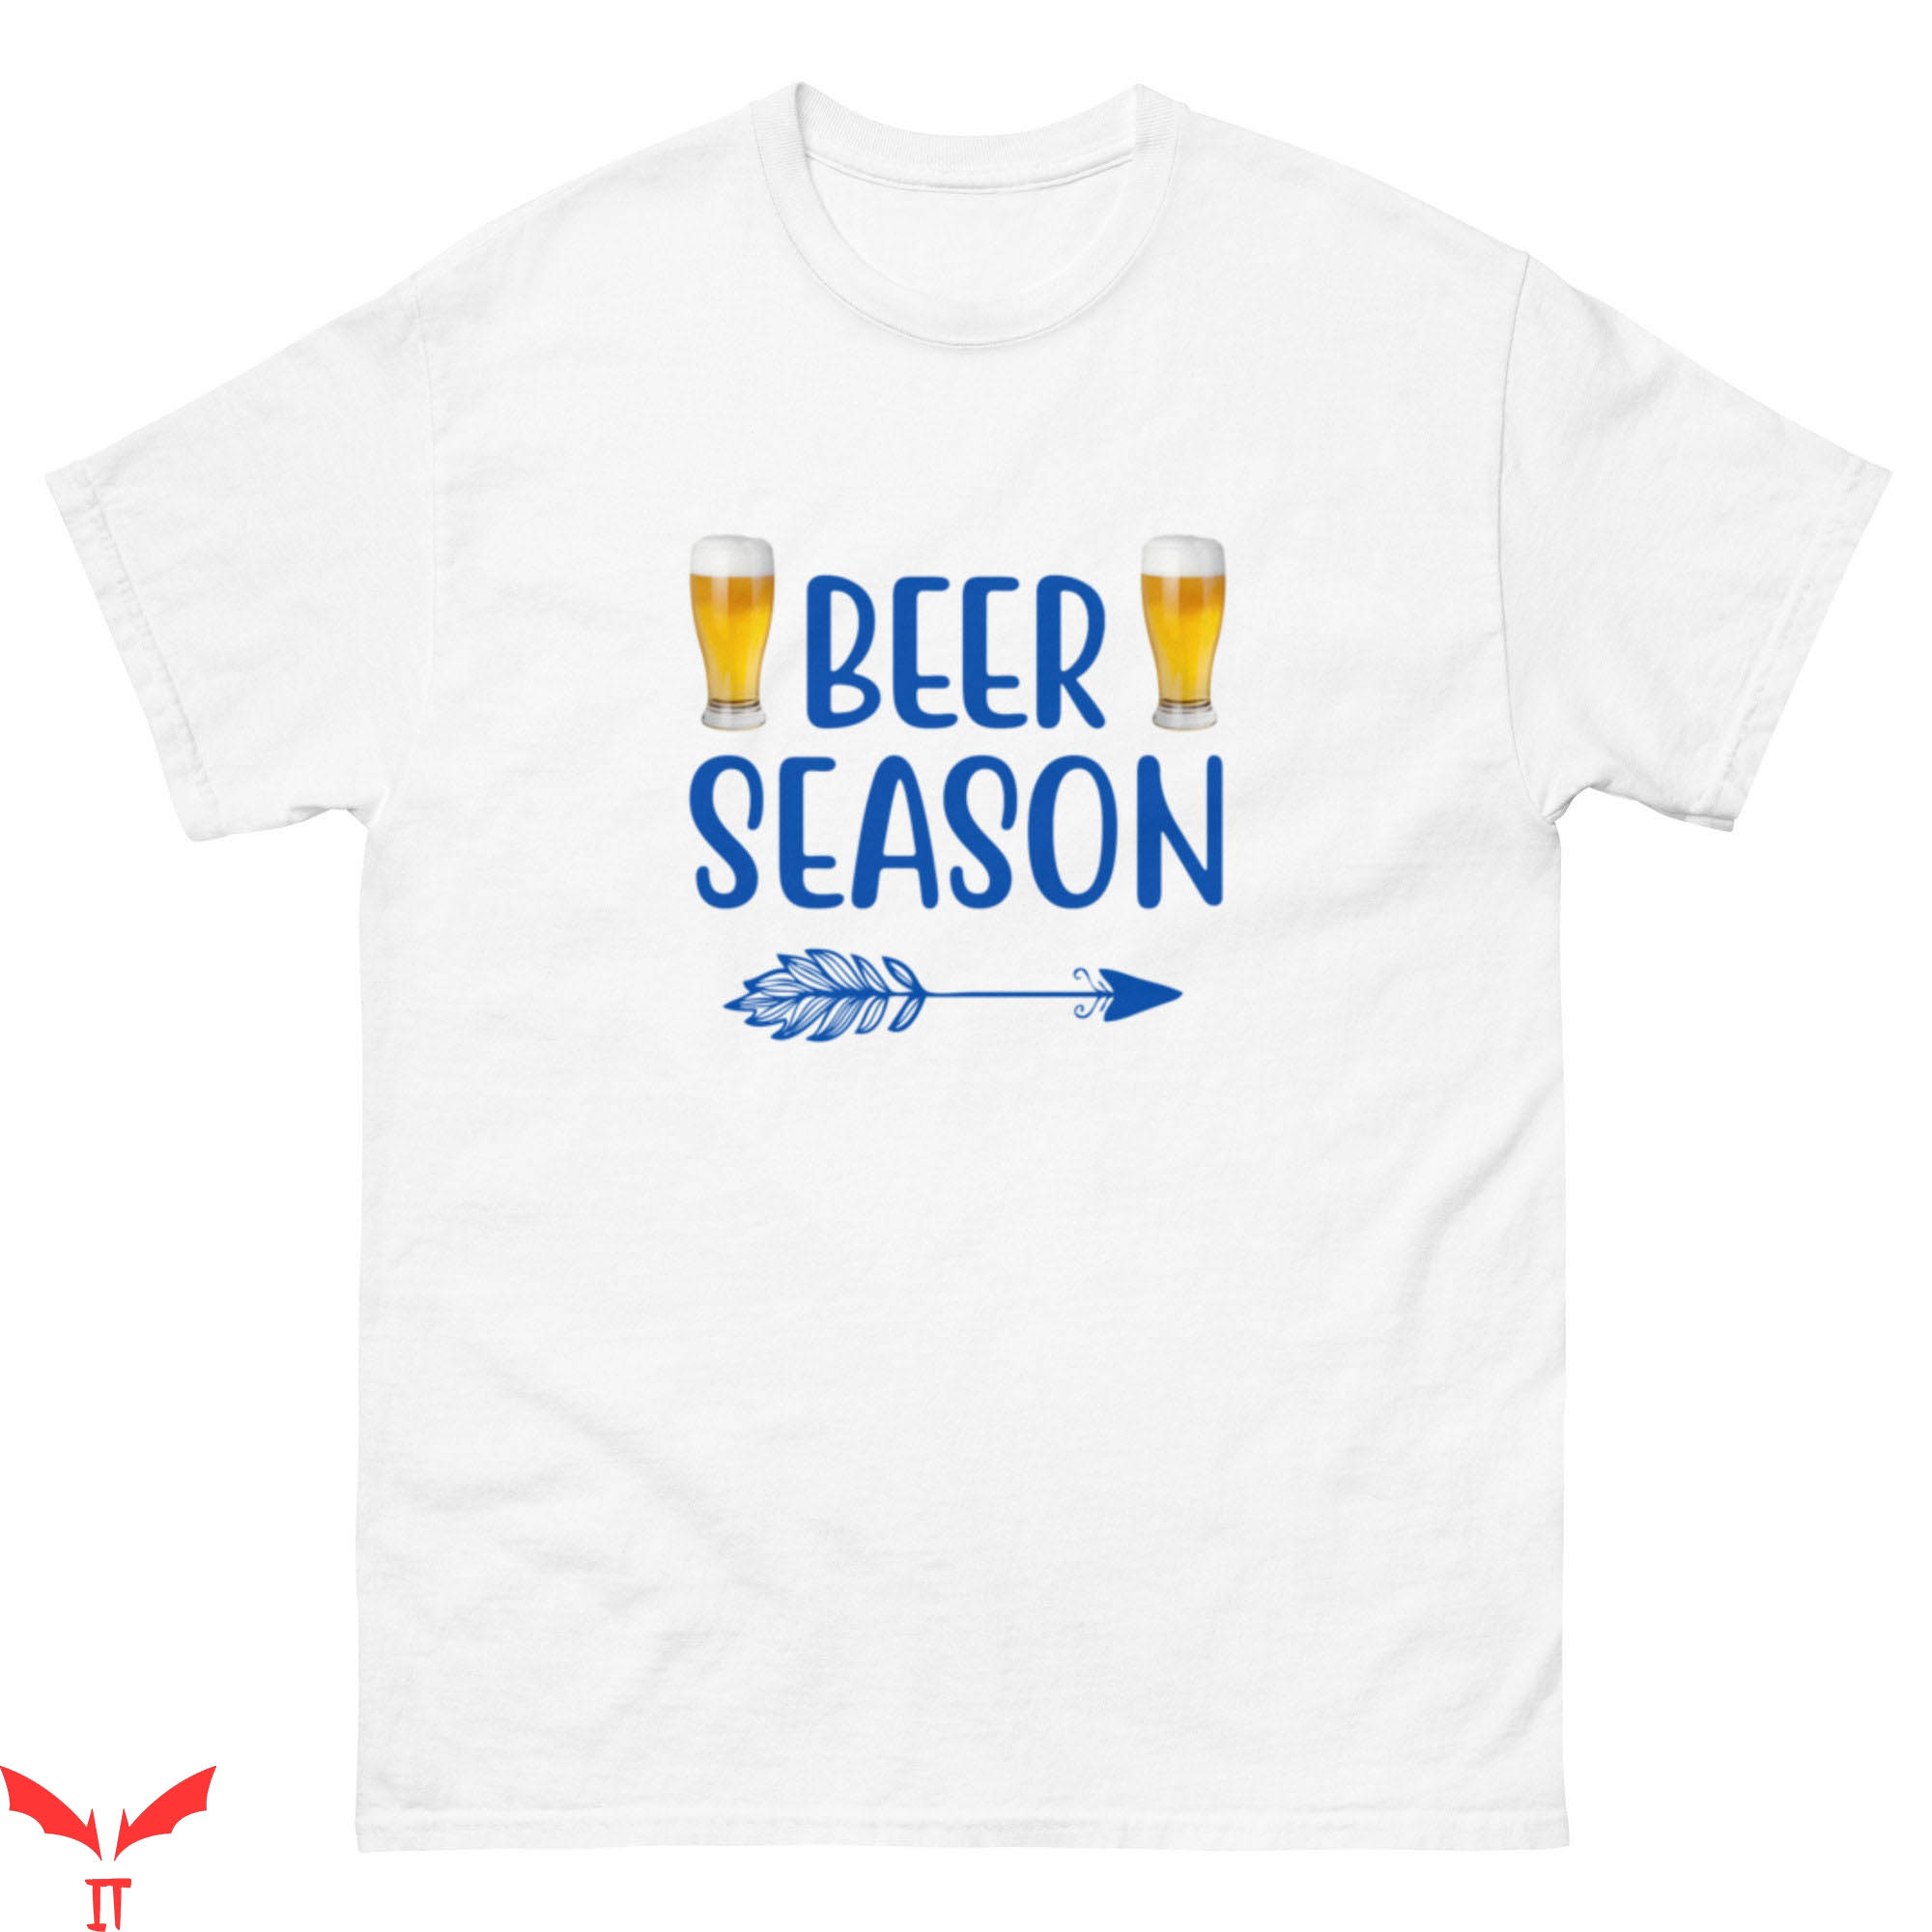 Beer Season T-Shirt Beer Saying Design Funny Graphic Tee